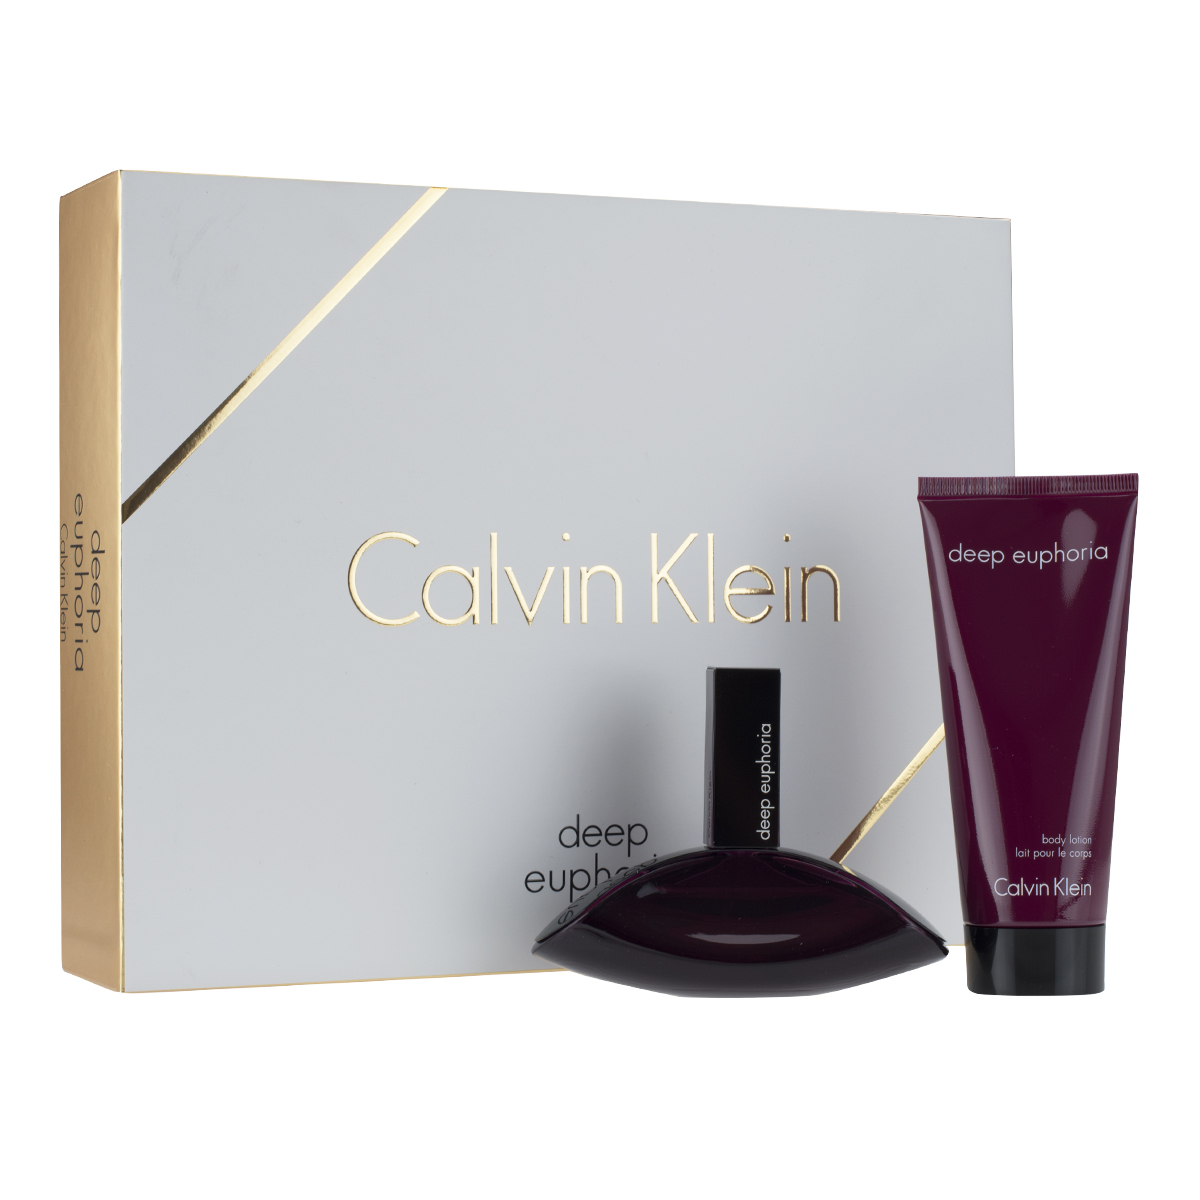 Calvin Klein Euphoria Deep Eau de Parfum Spray 50ml Gift Set | Beautybuys  Ireland